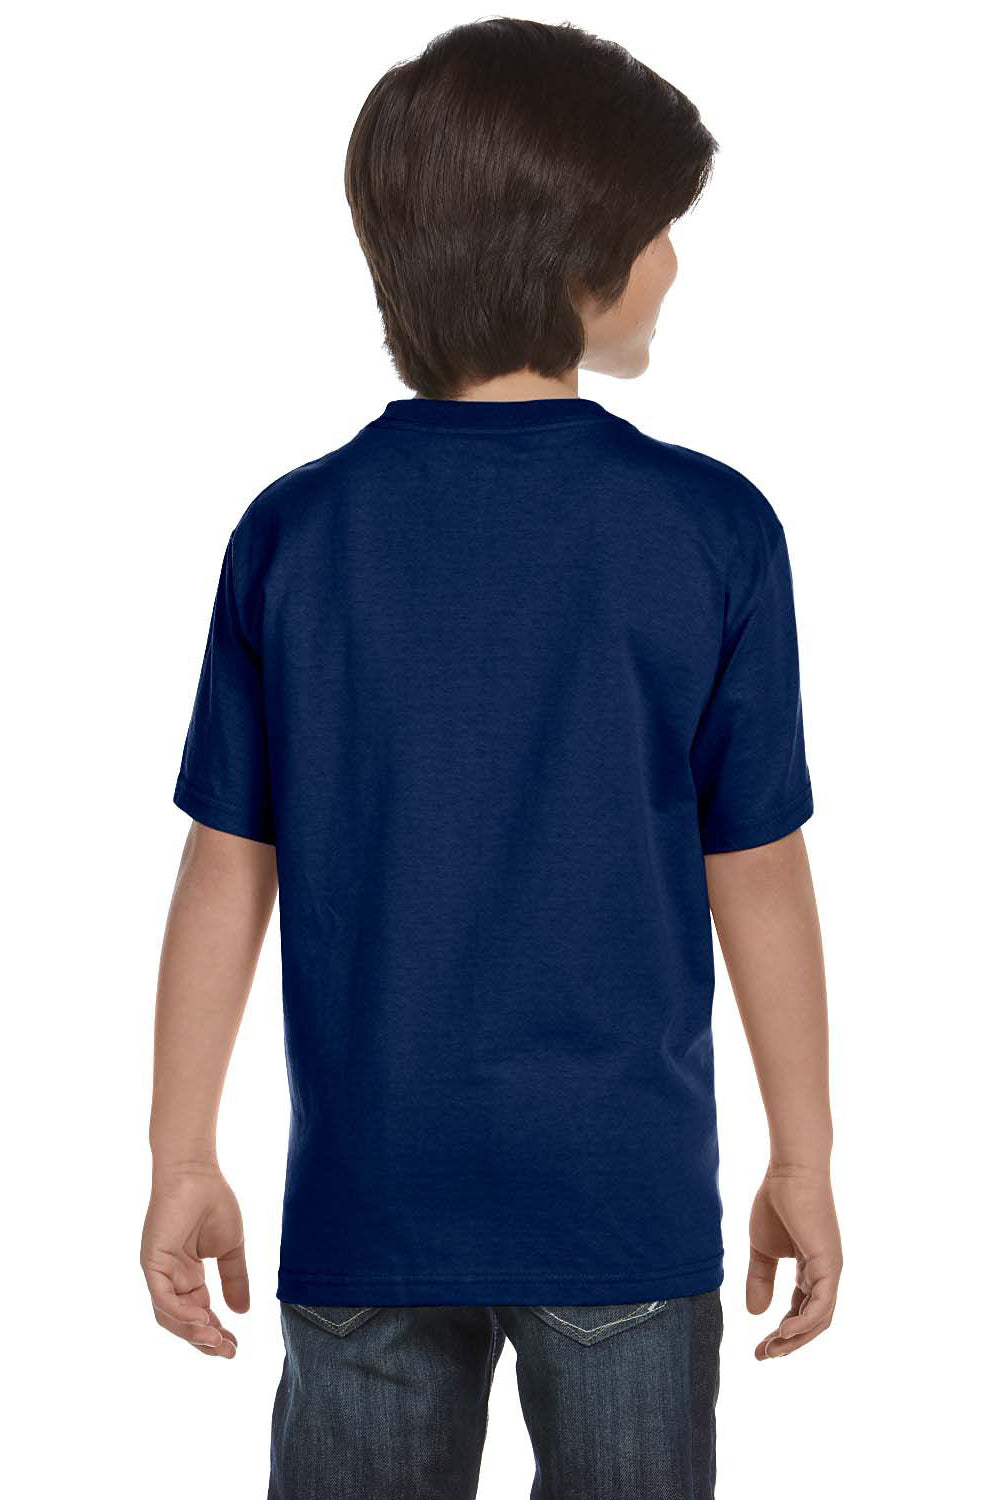 Gildan G800B Youth DryBlend Moisture Wicking Short Sleeve Crewneck T-Shirt Navy Blue Back